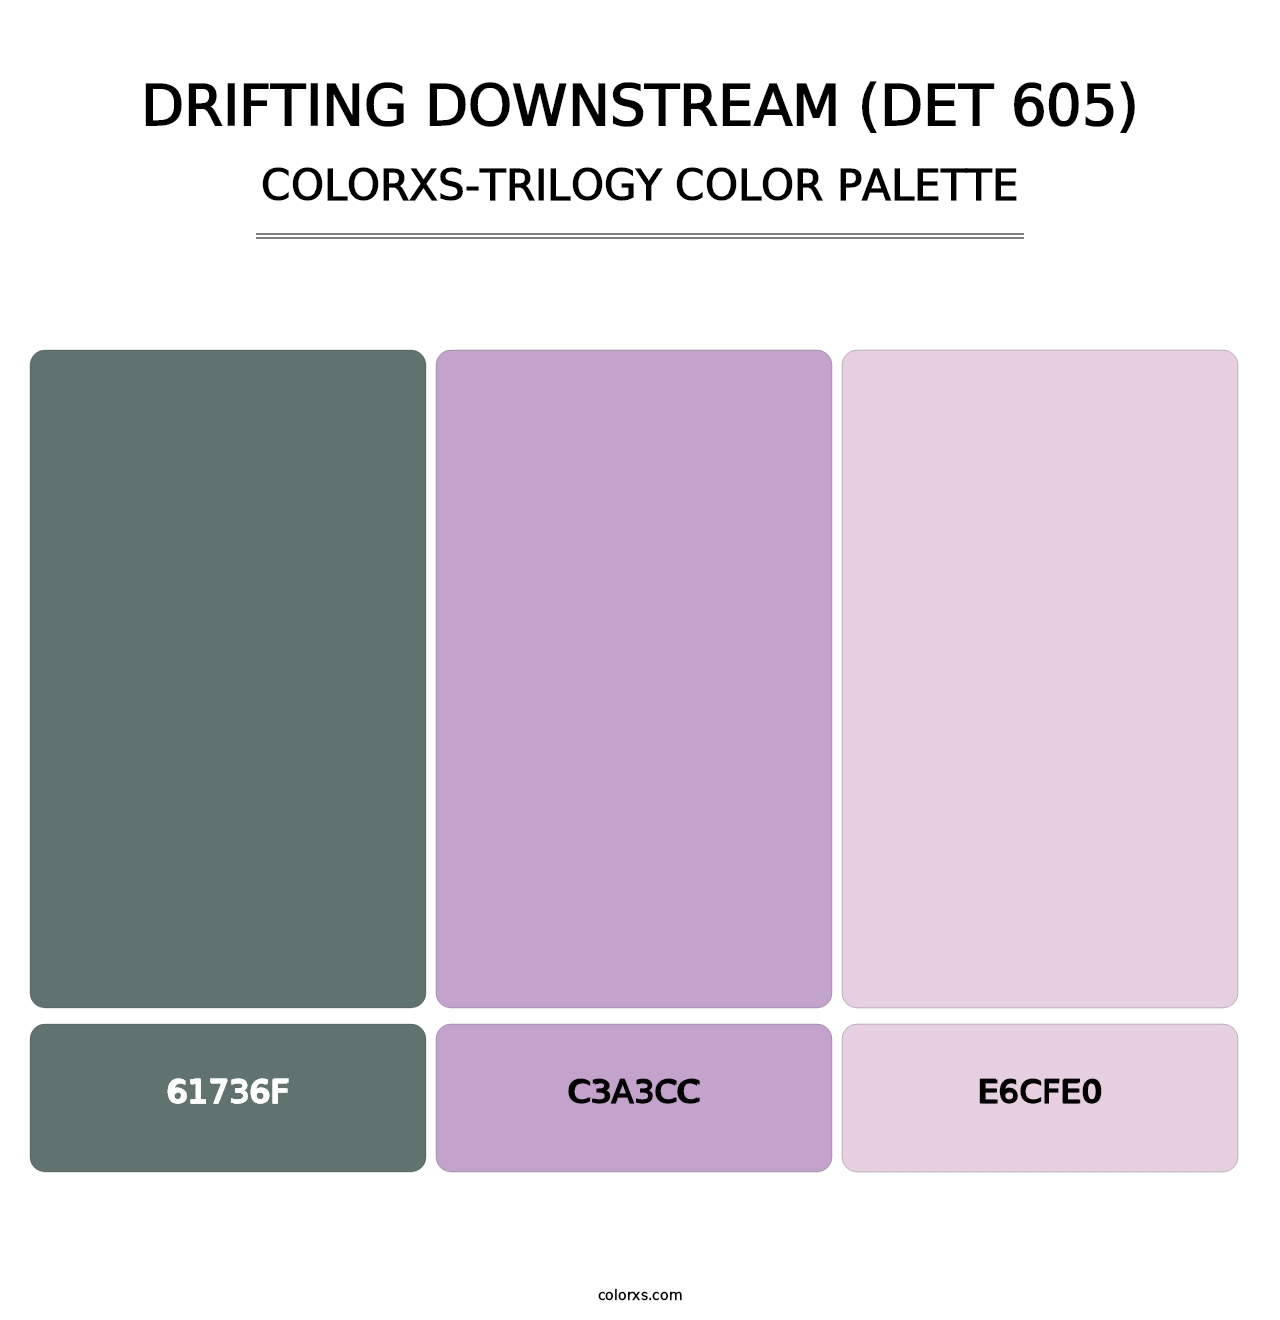 Drifting Downstream (DET 605) - Colorxs Trilogy Palette